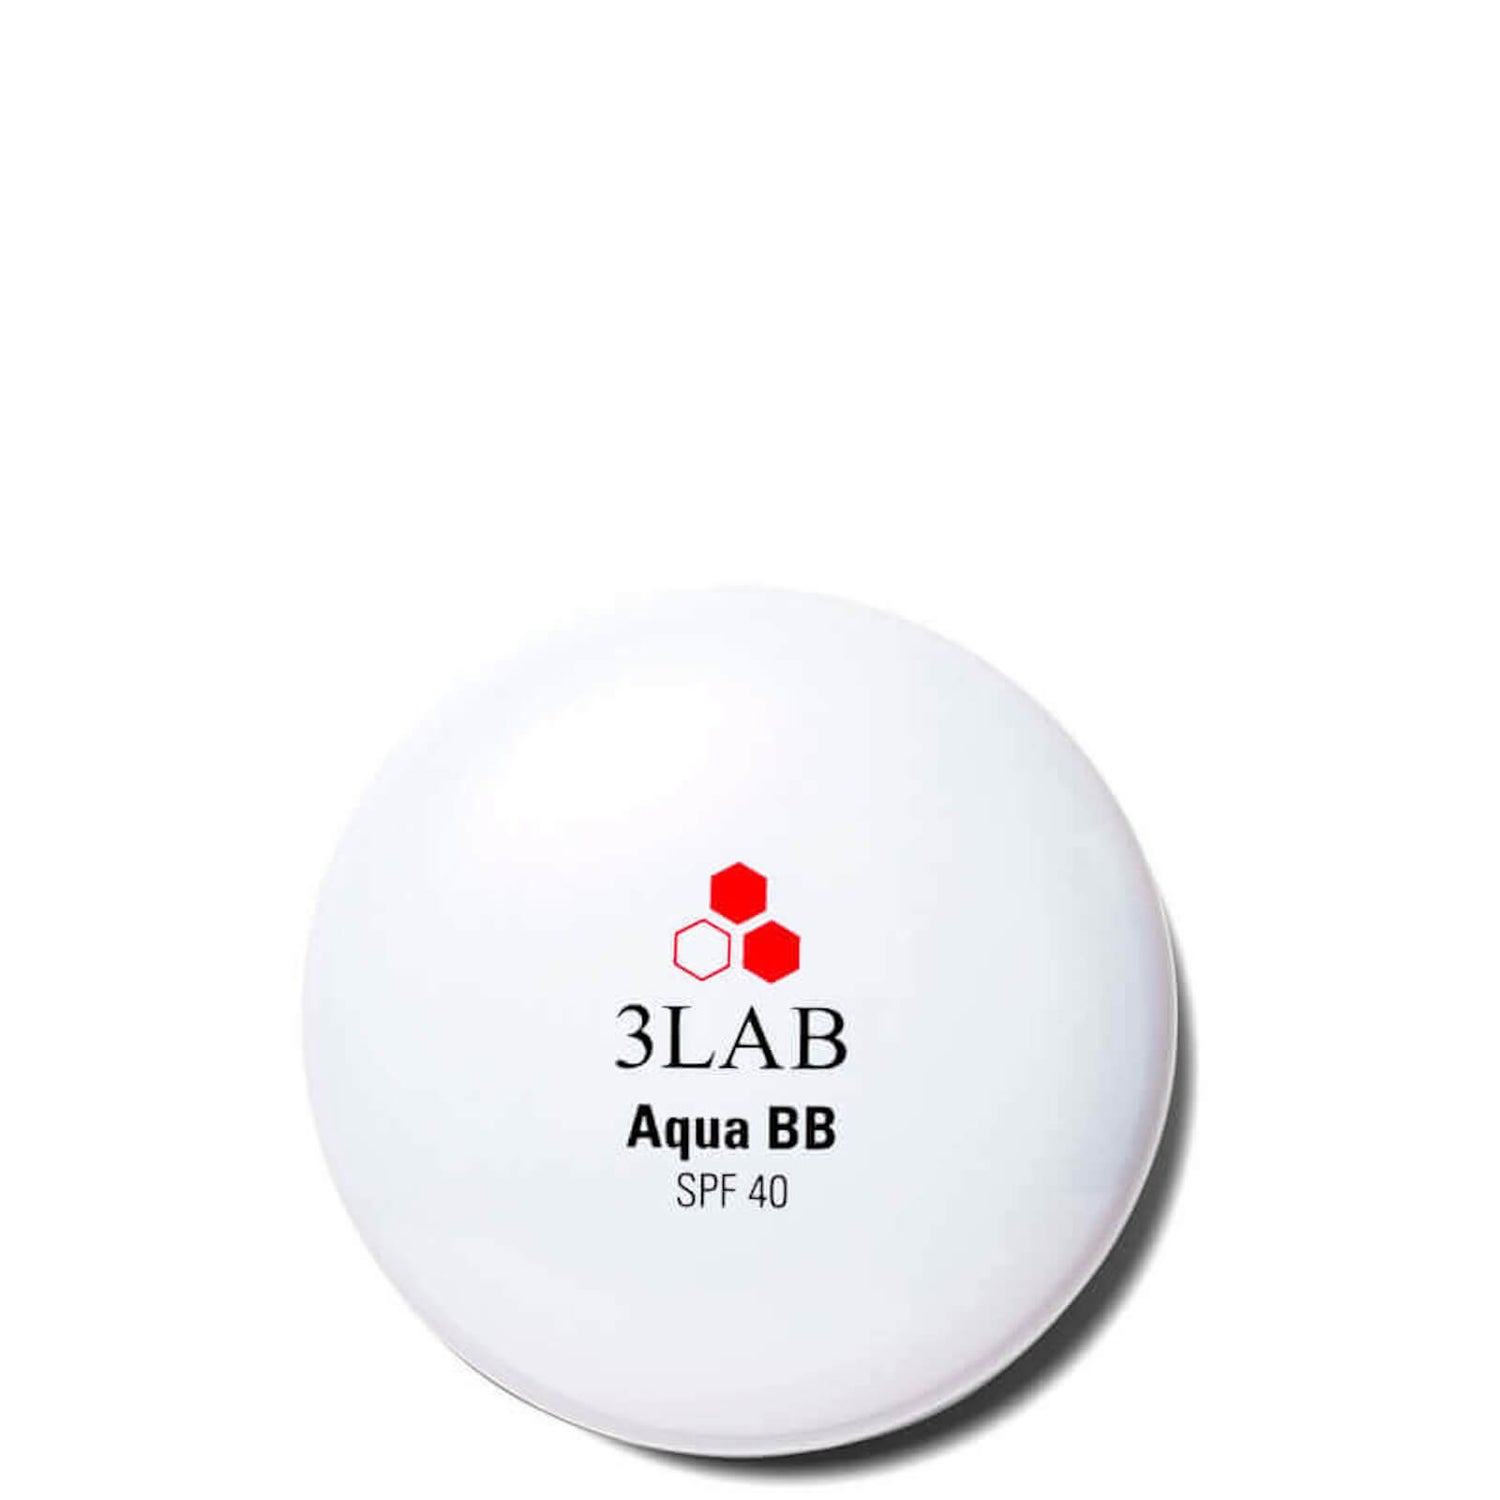 3LAB Aqua BB SPF 40 1 oz.